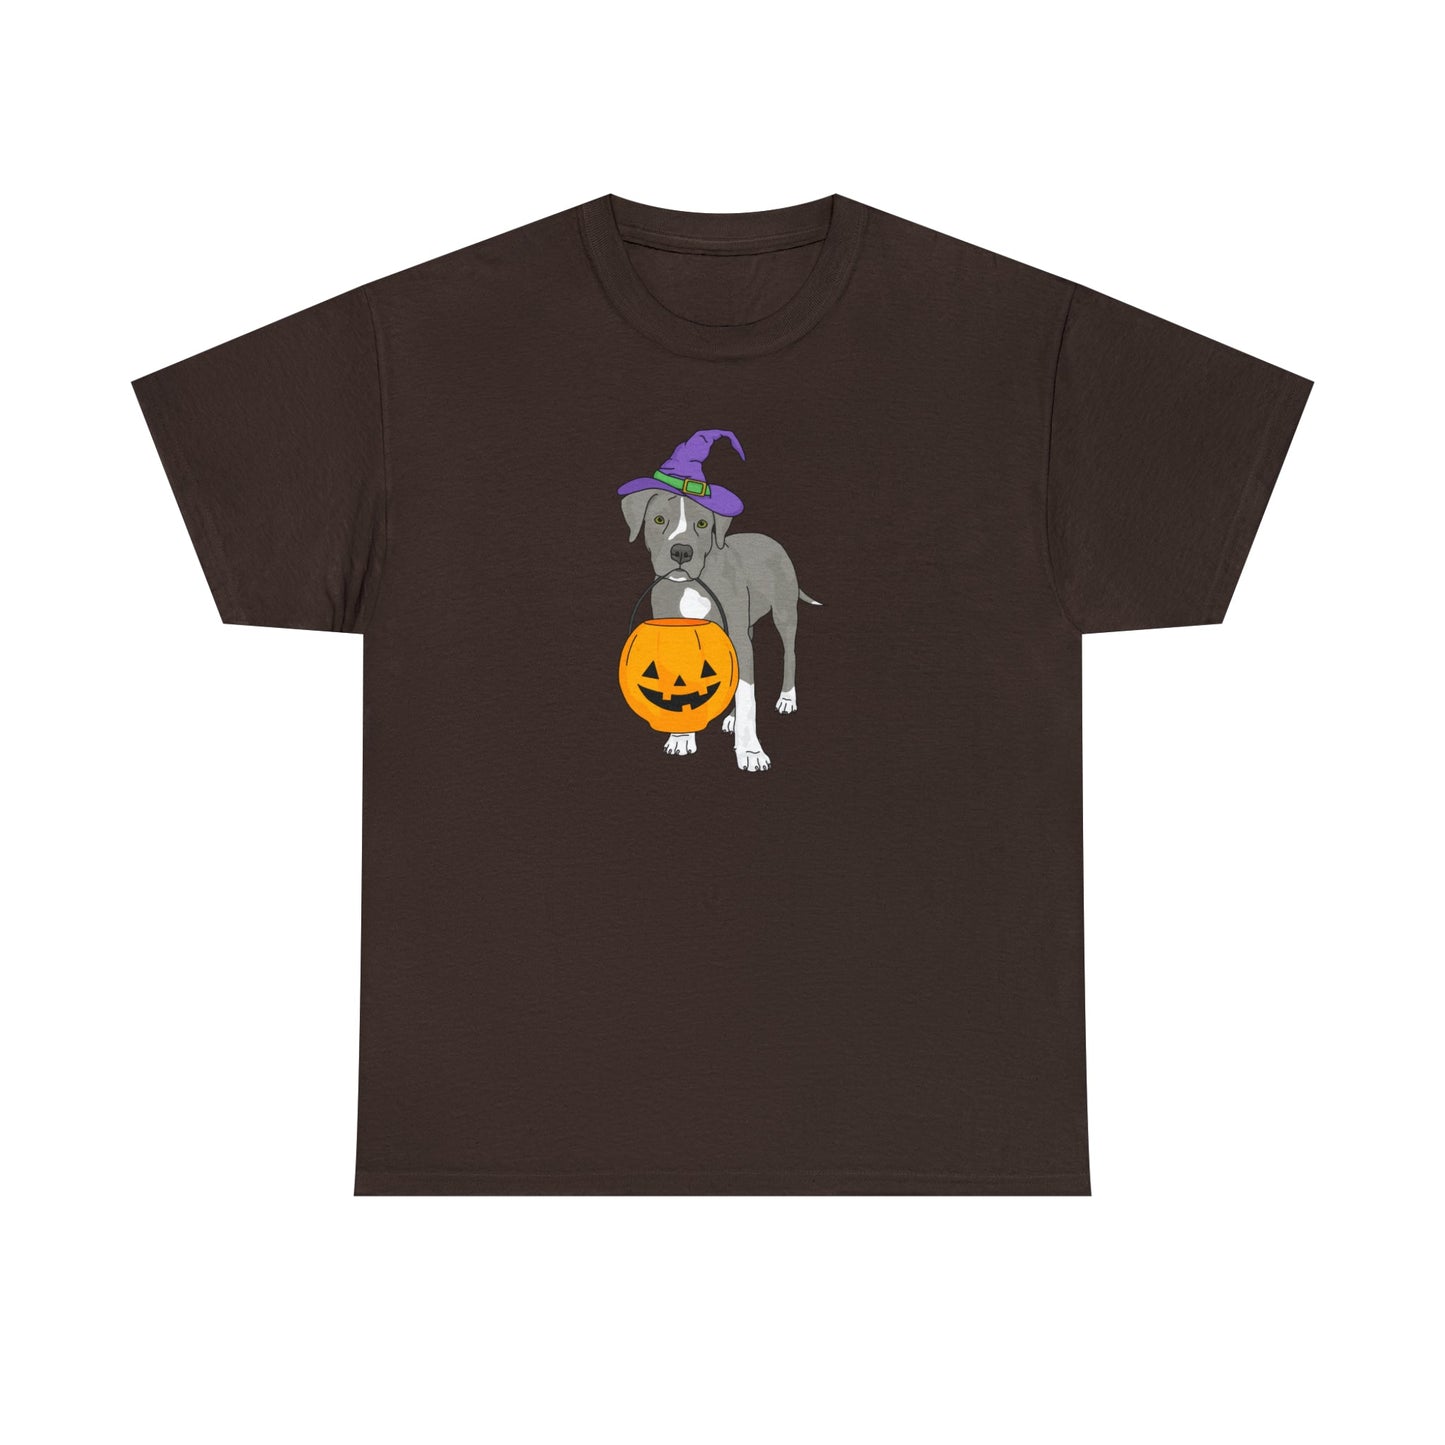 Witchy Puppy | T-shirt - Detezi Designs-22457871915819401606